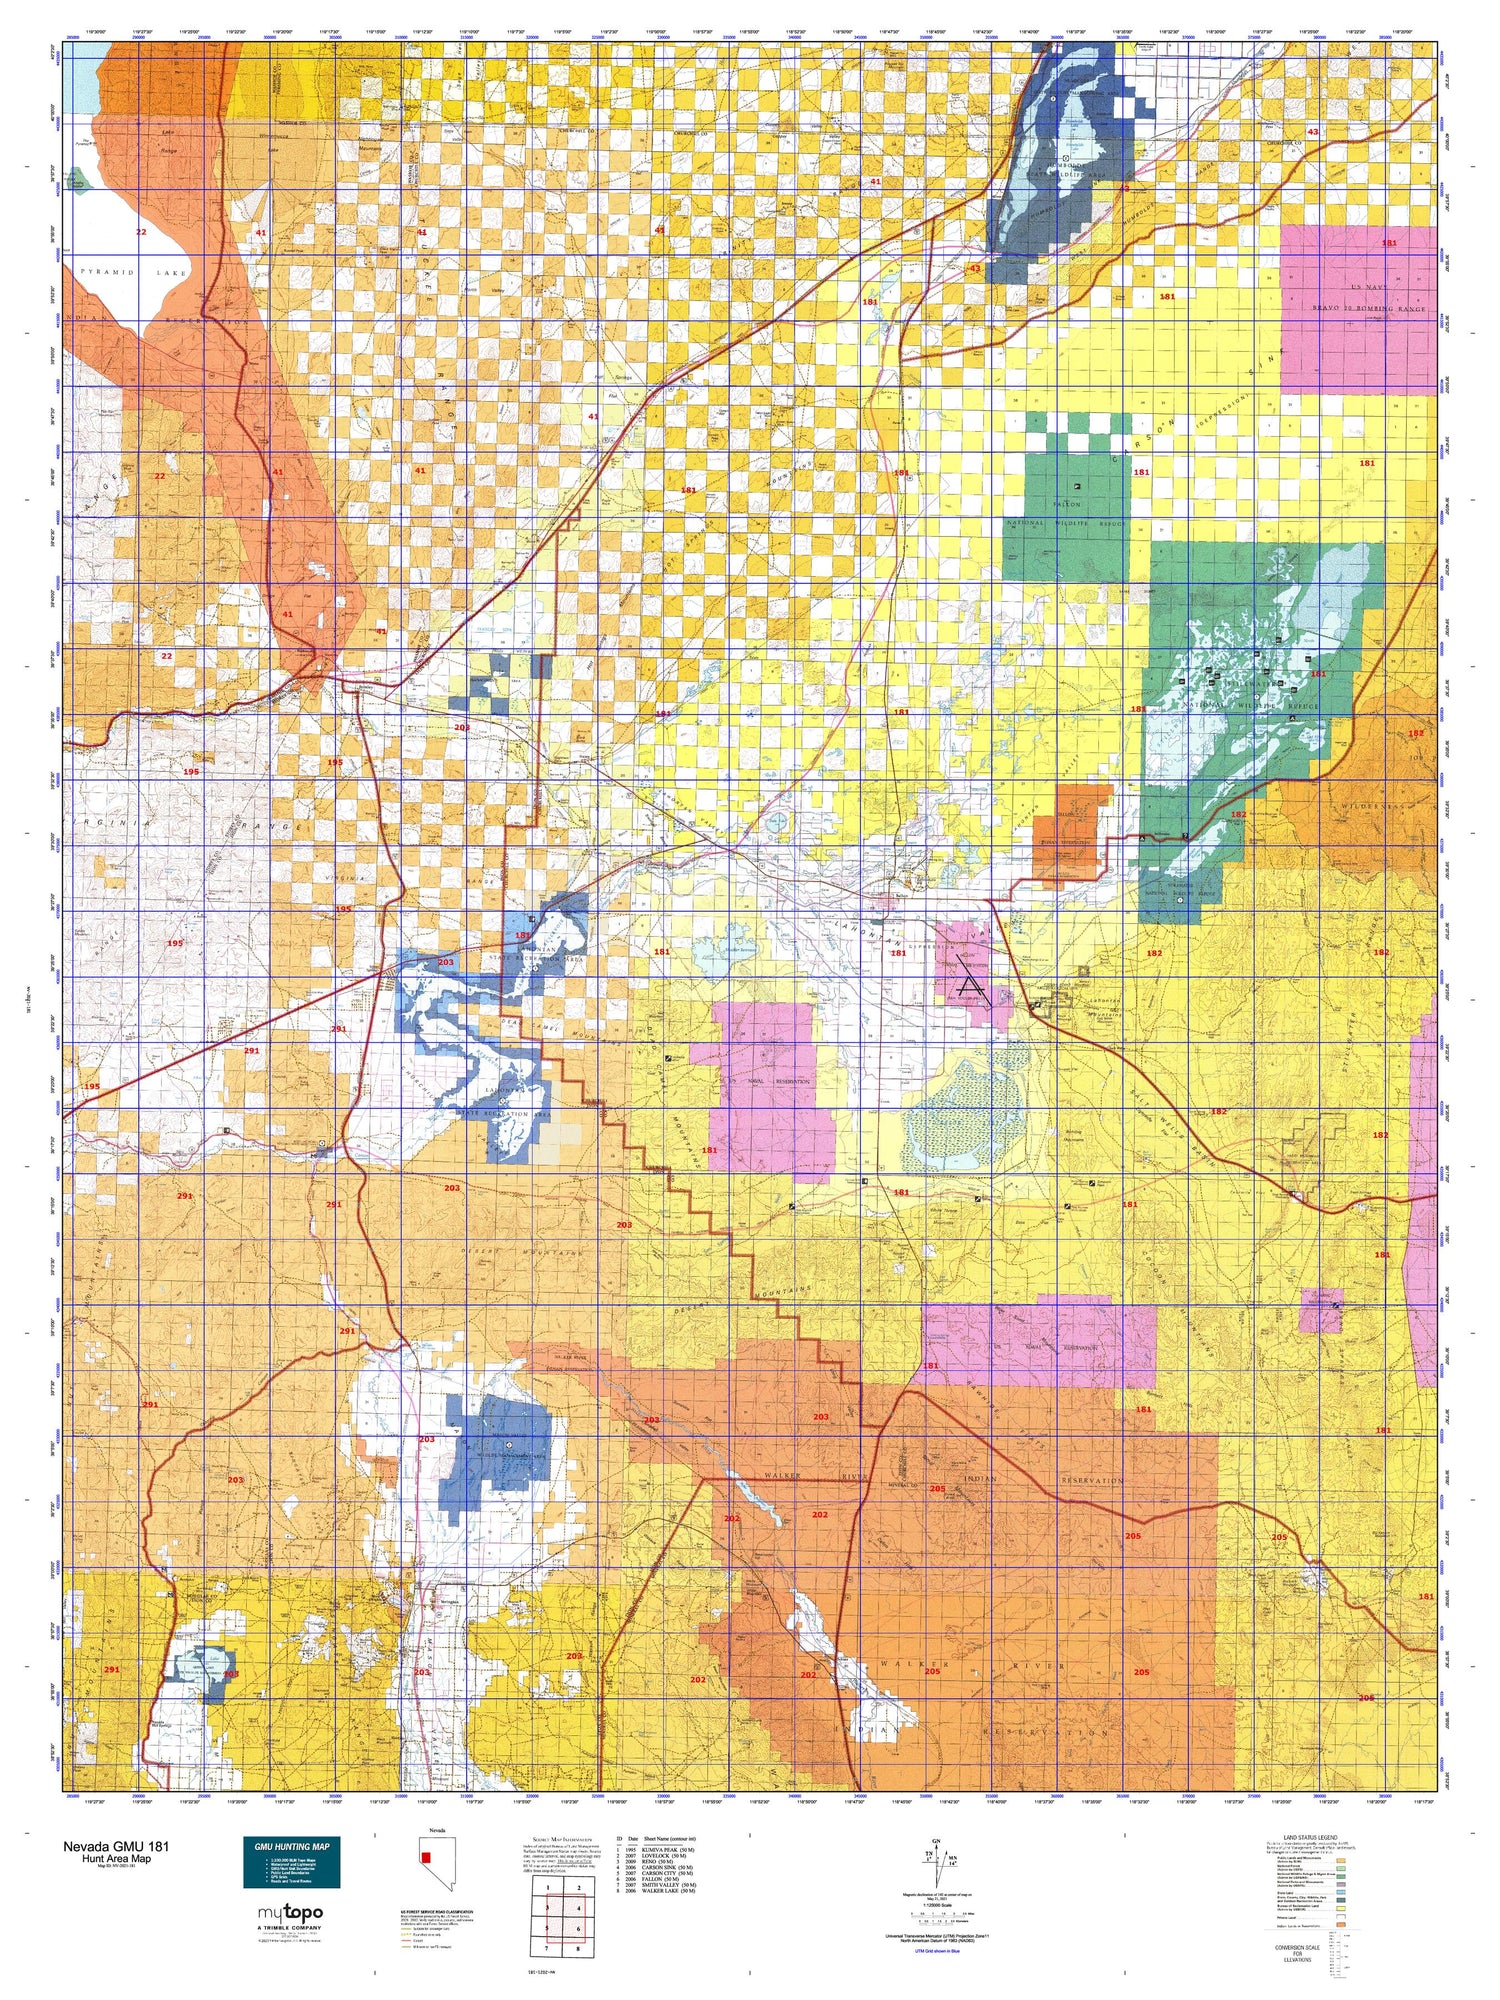 Nevada GMU 181 Map Image